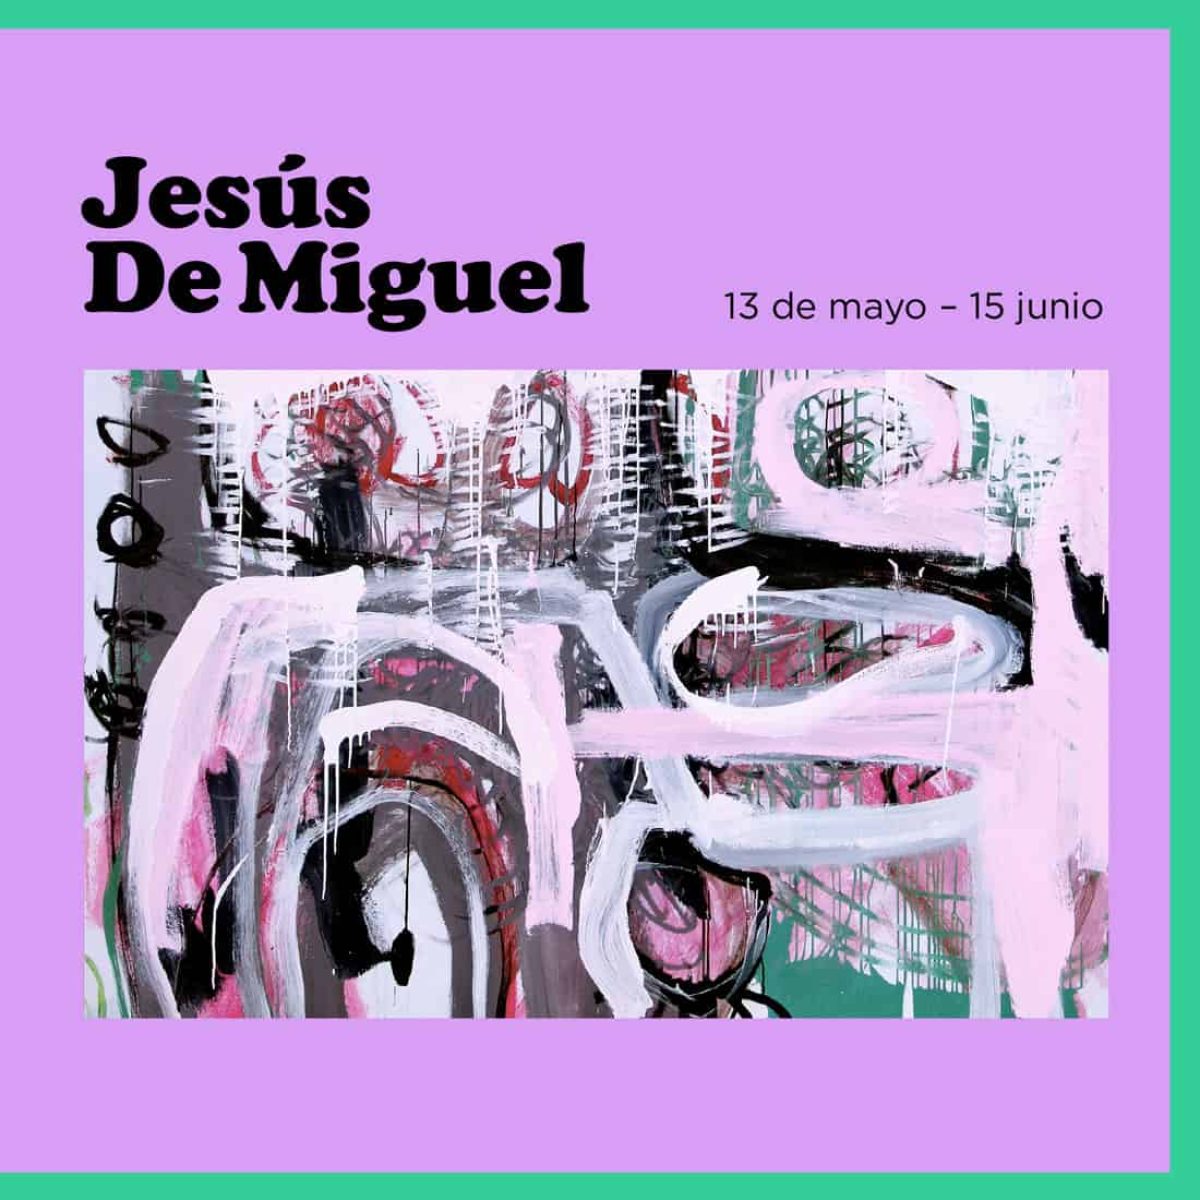 tentoonstelling-jezus-de-miguel-paradiso-art-hotel-ibiza-2021-welcometoibiza